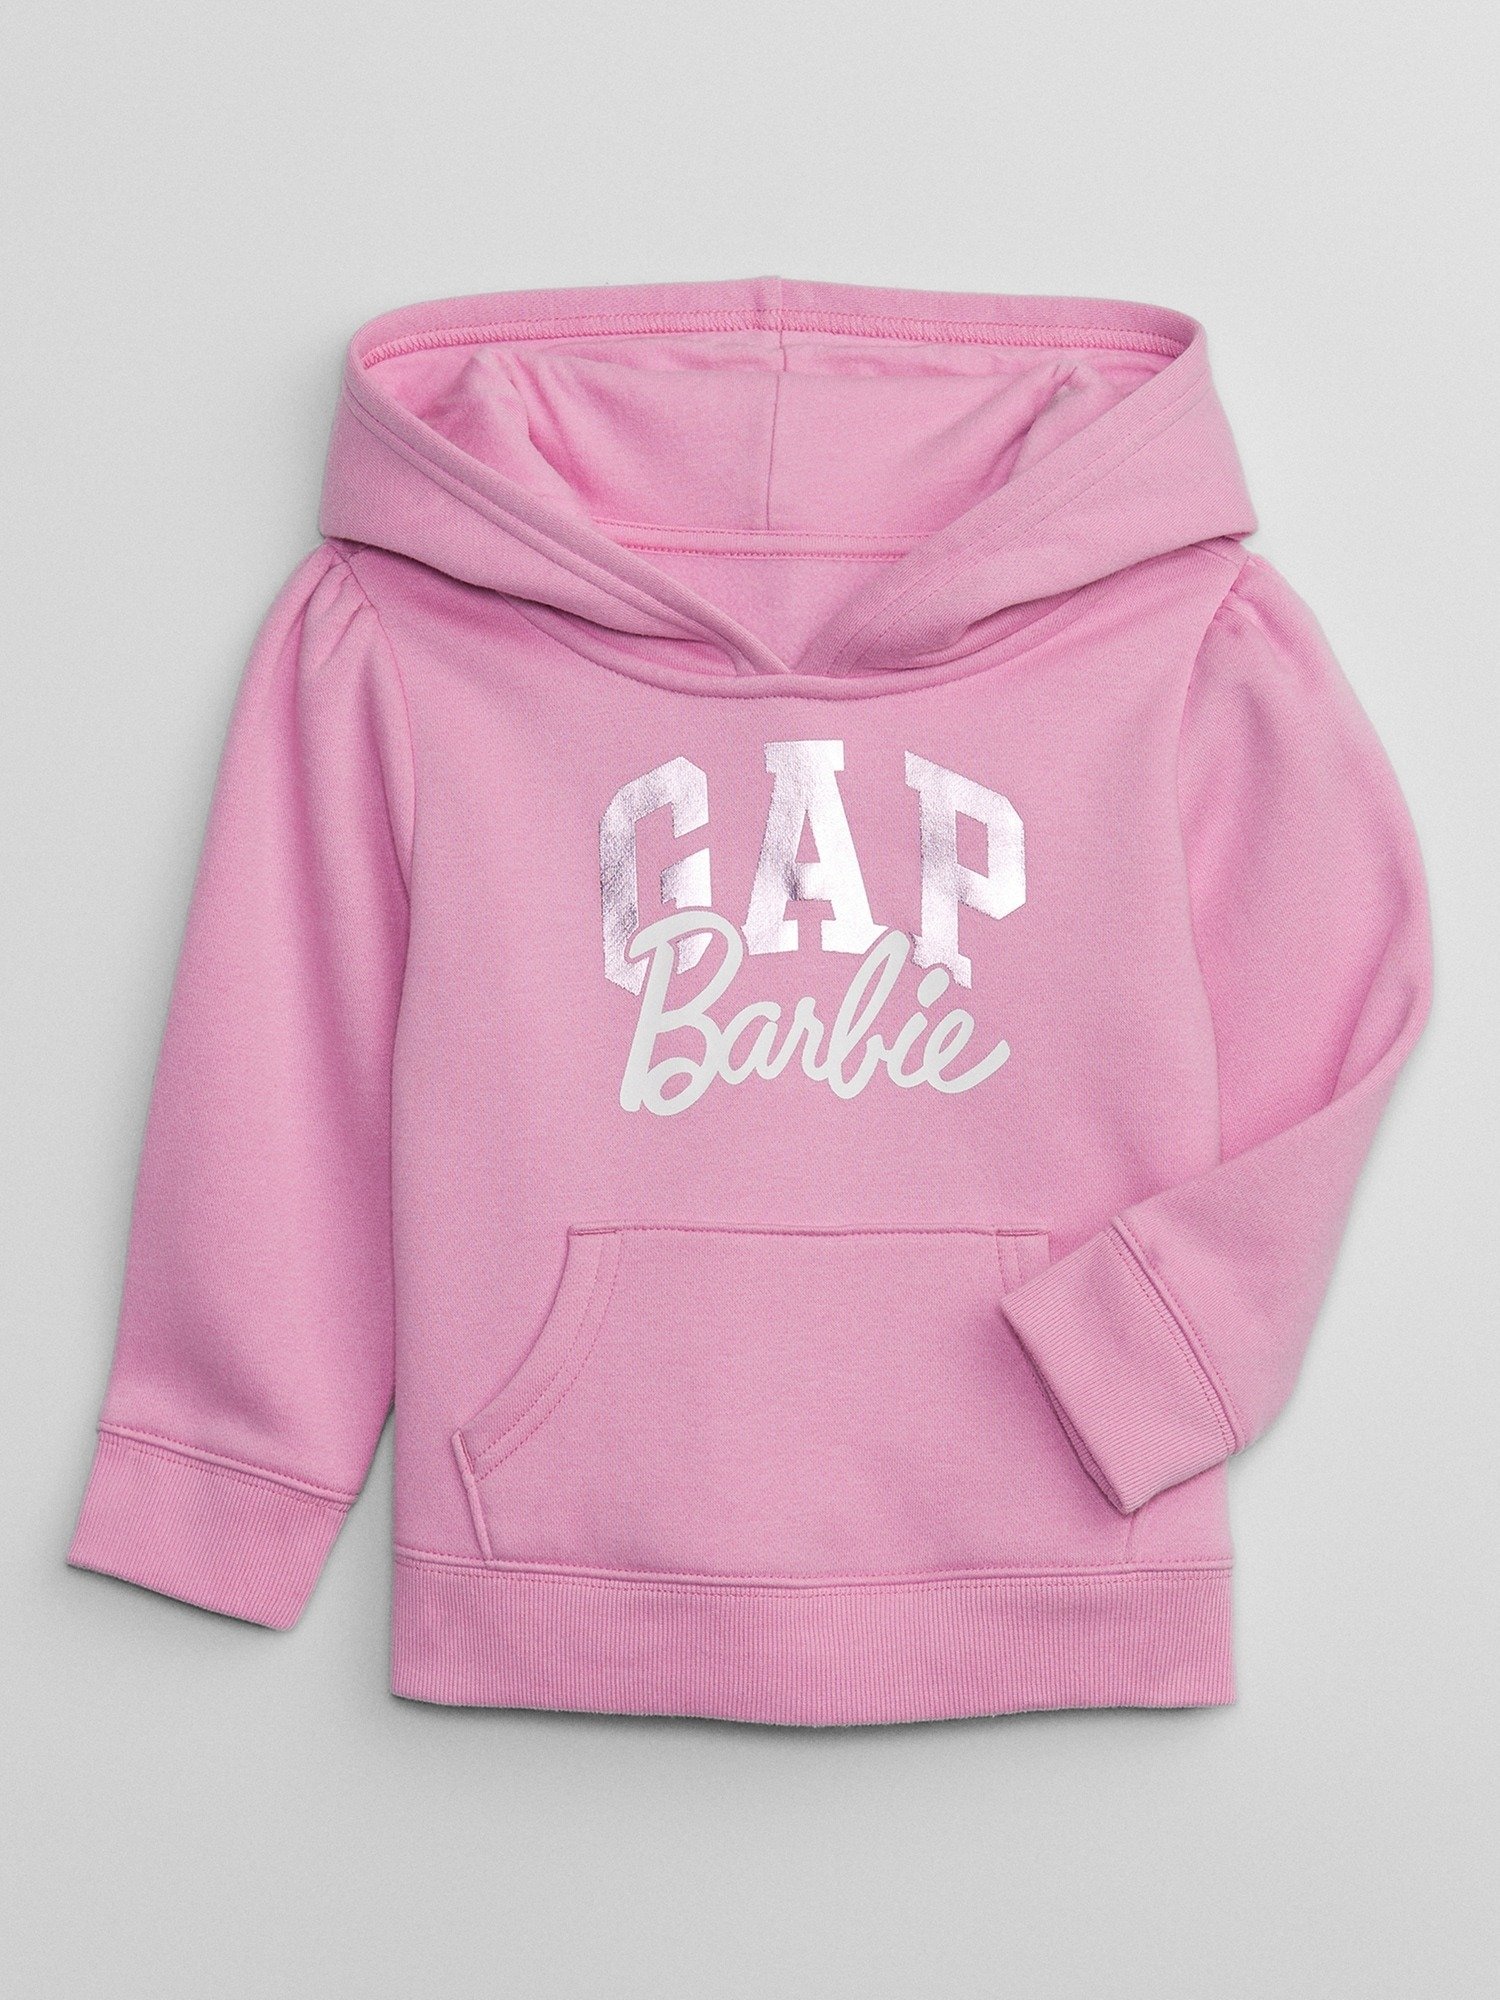 Gap Barbie:trade_mark: Logo Fleece Sweatshirt product image